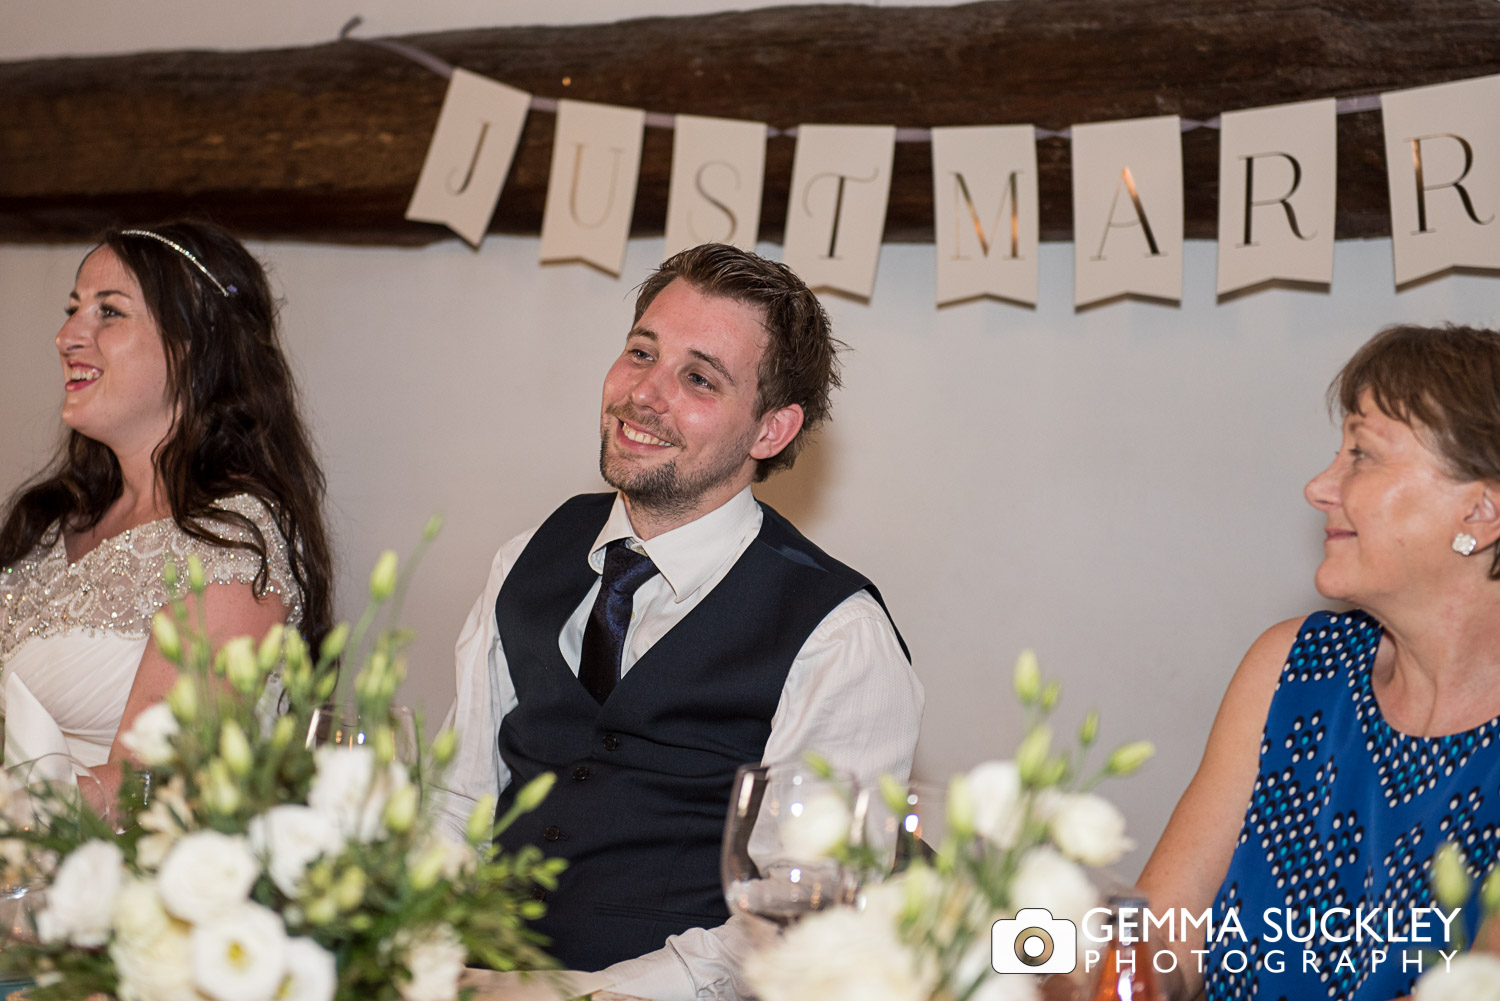 Yorkshire groom at his Lake Garda wedding